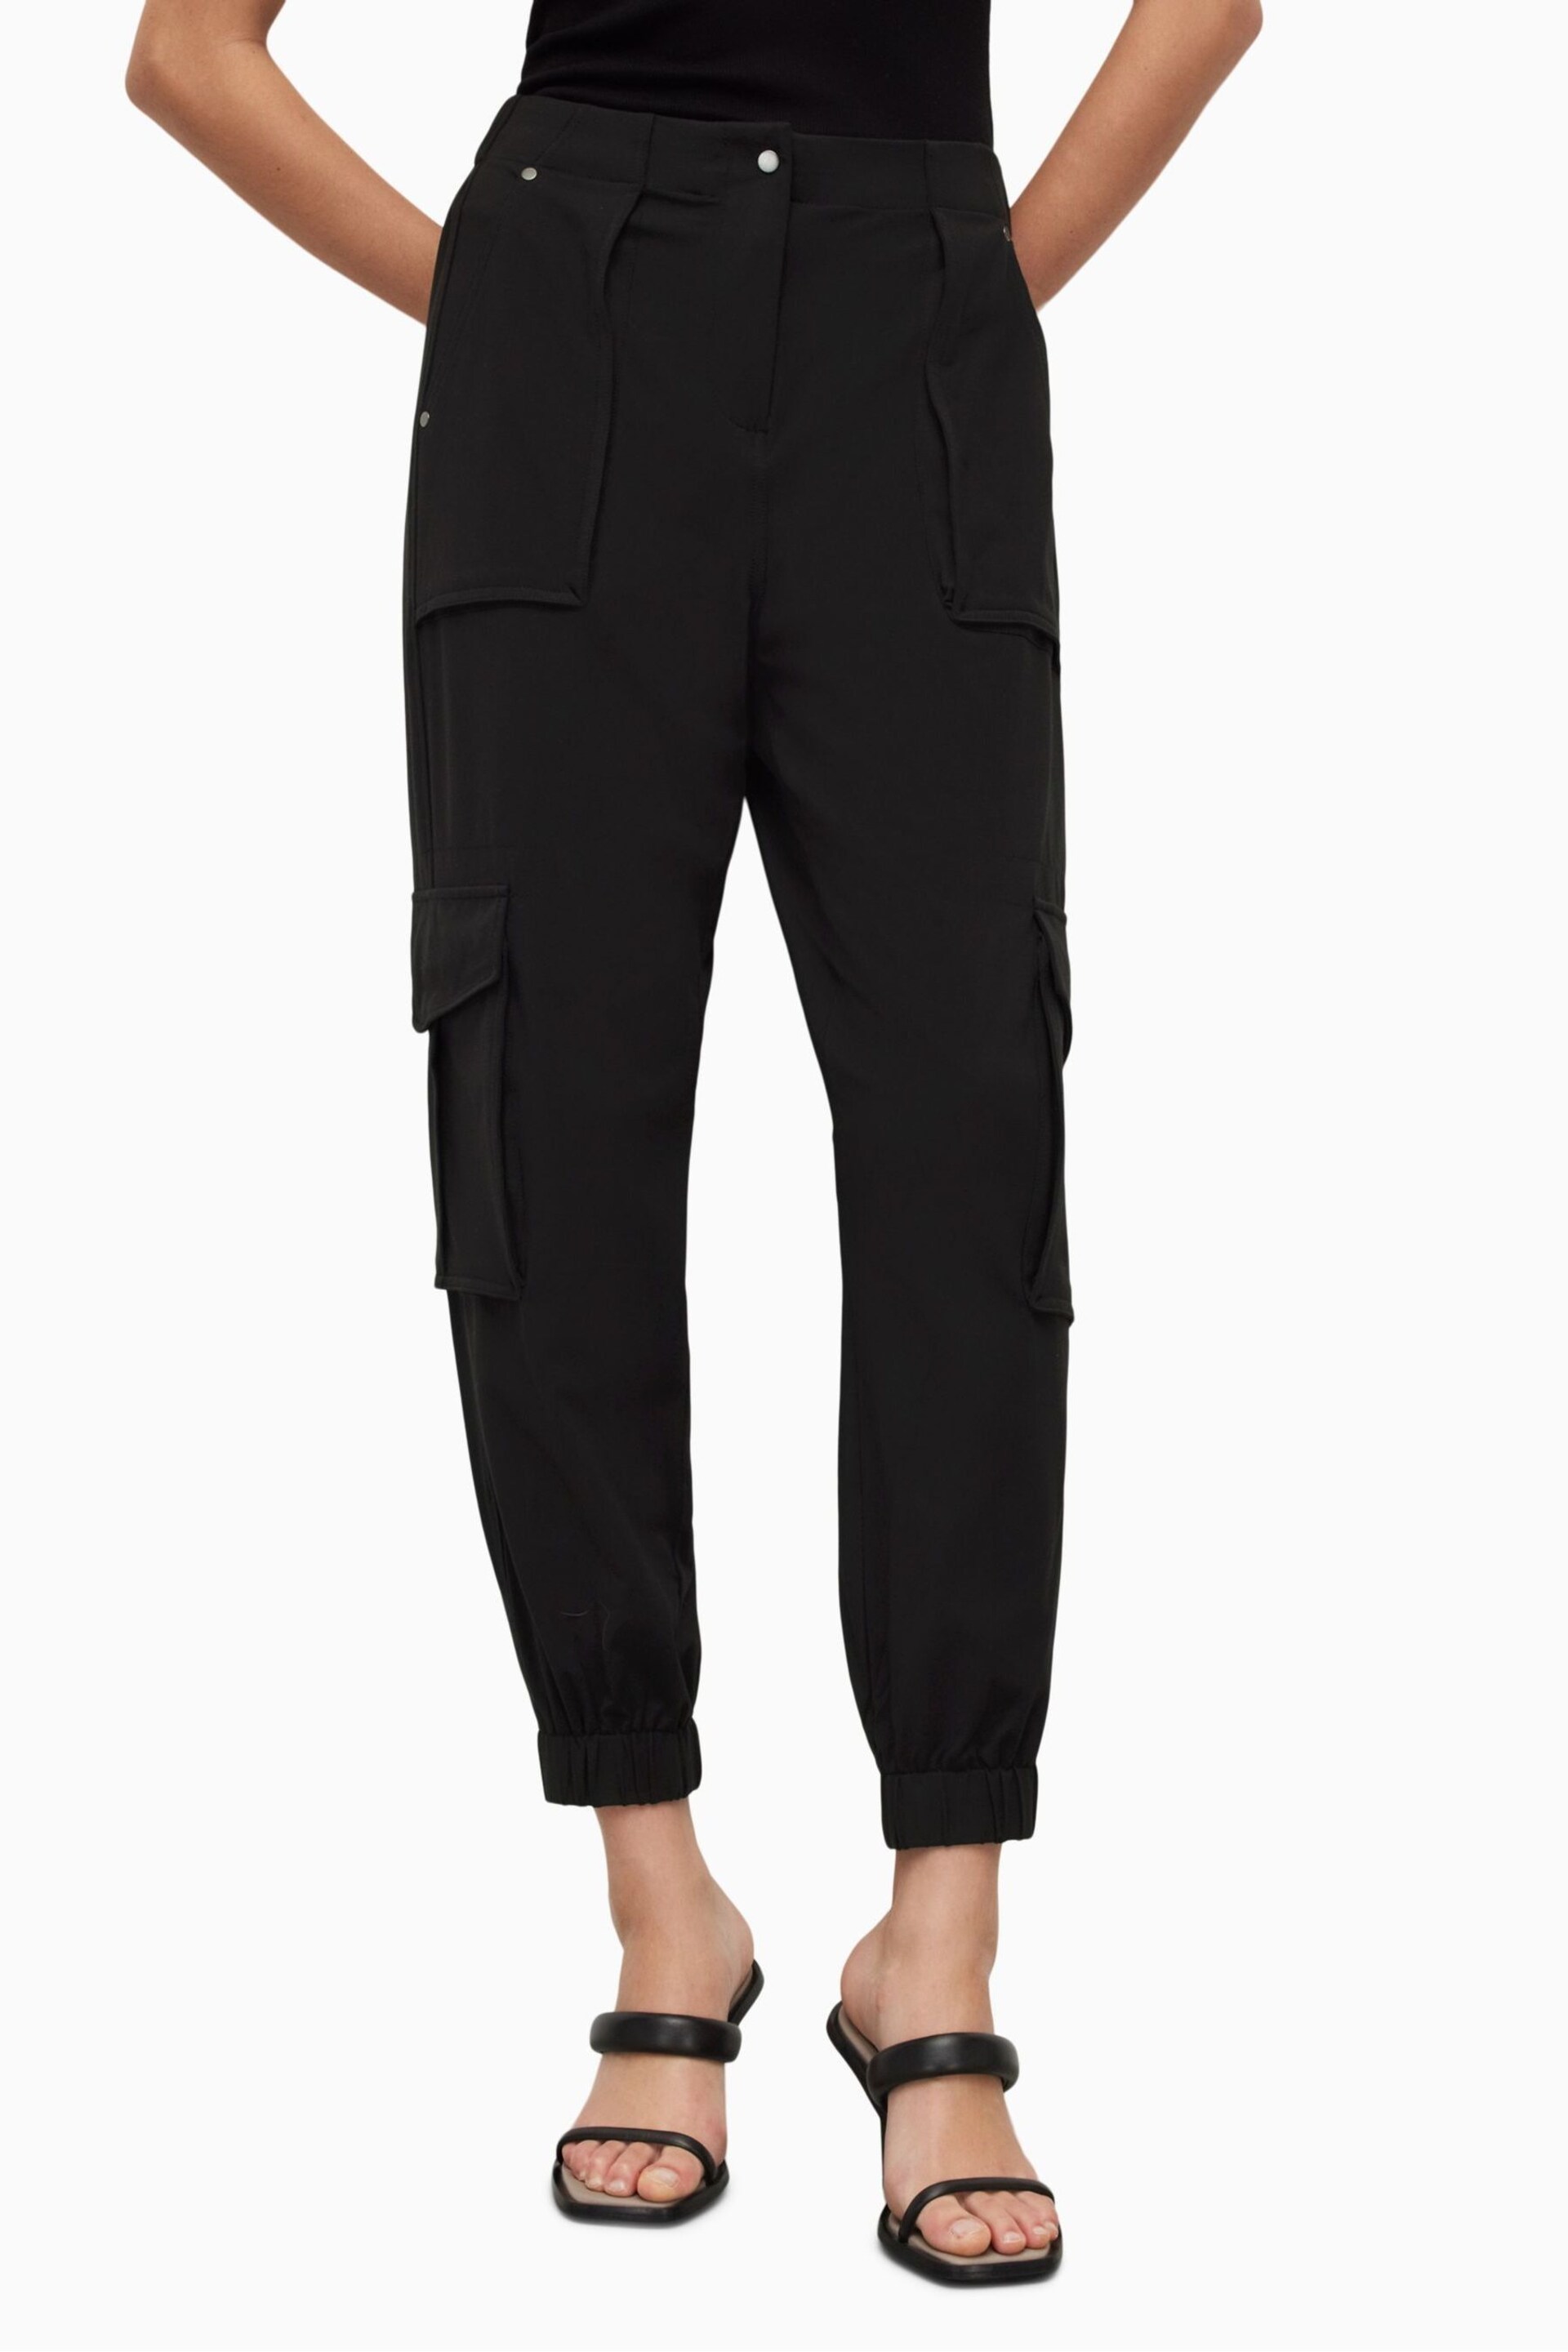 AllSaints Black Frieda Jersey Trousers - Image 5 of 6